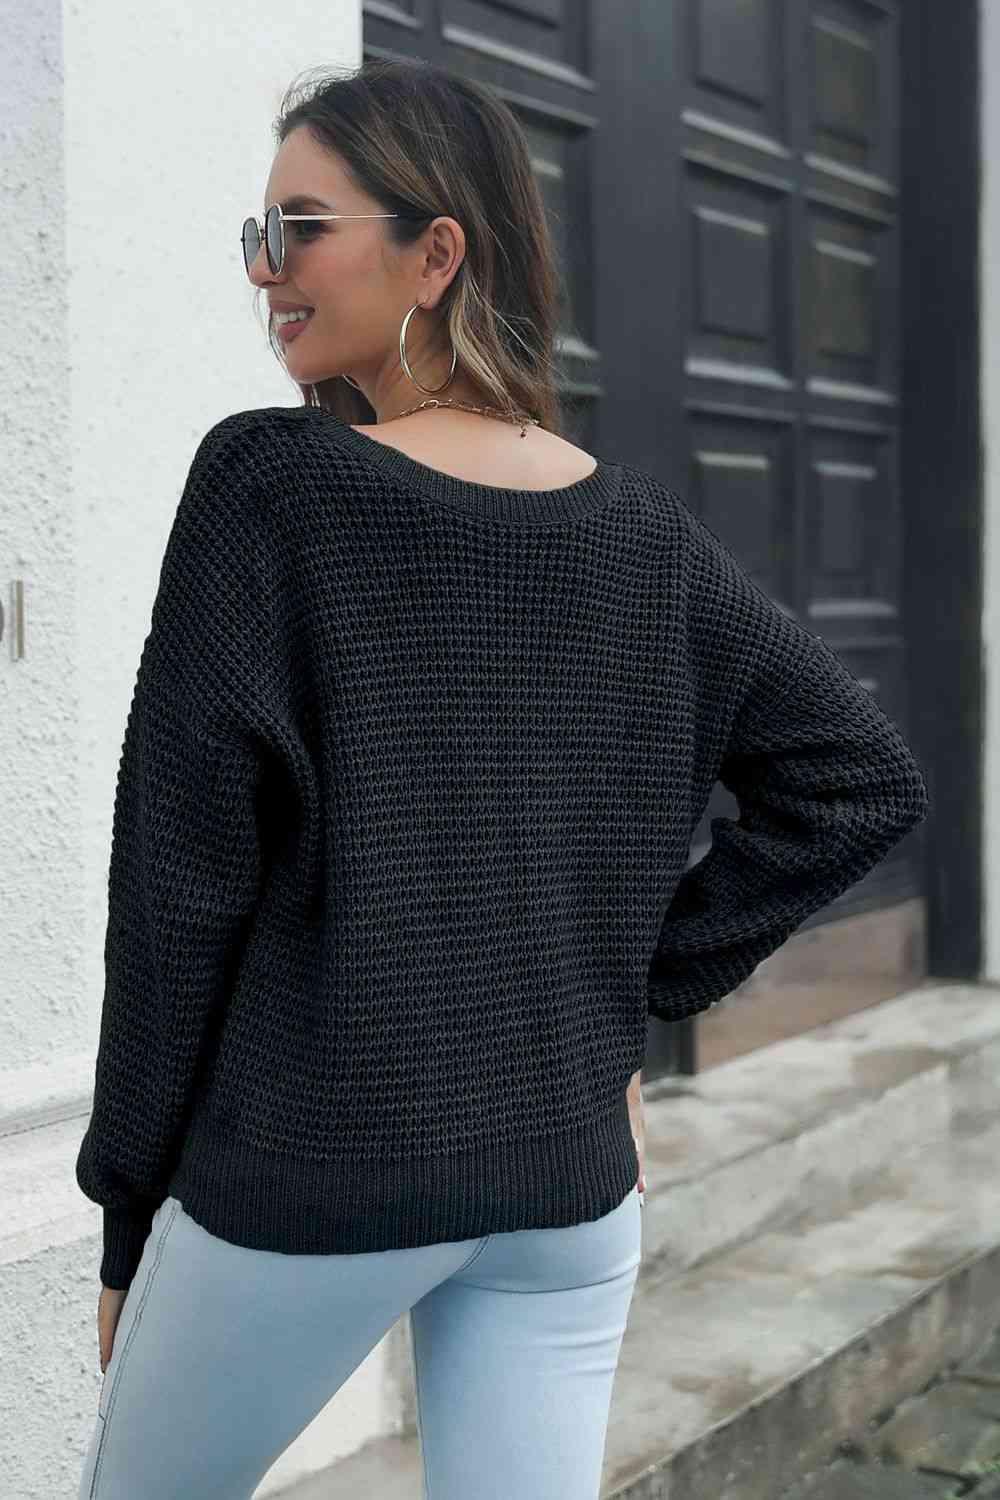 Bona Fide Fashion - Crisscross Surplice Neck Long Sleeve Sweater - Women Fashion - Bona Fide Fashion